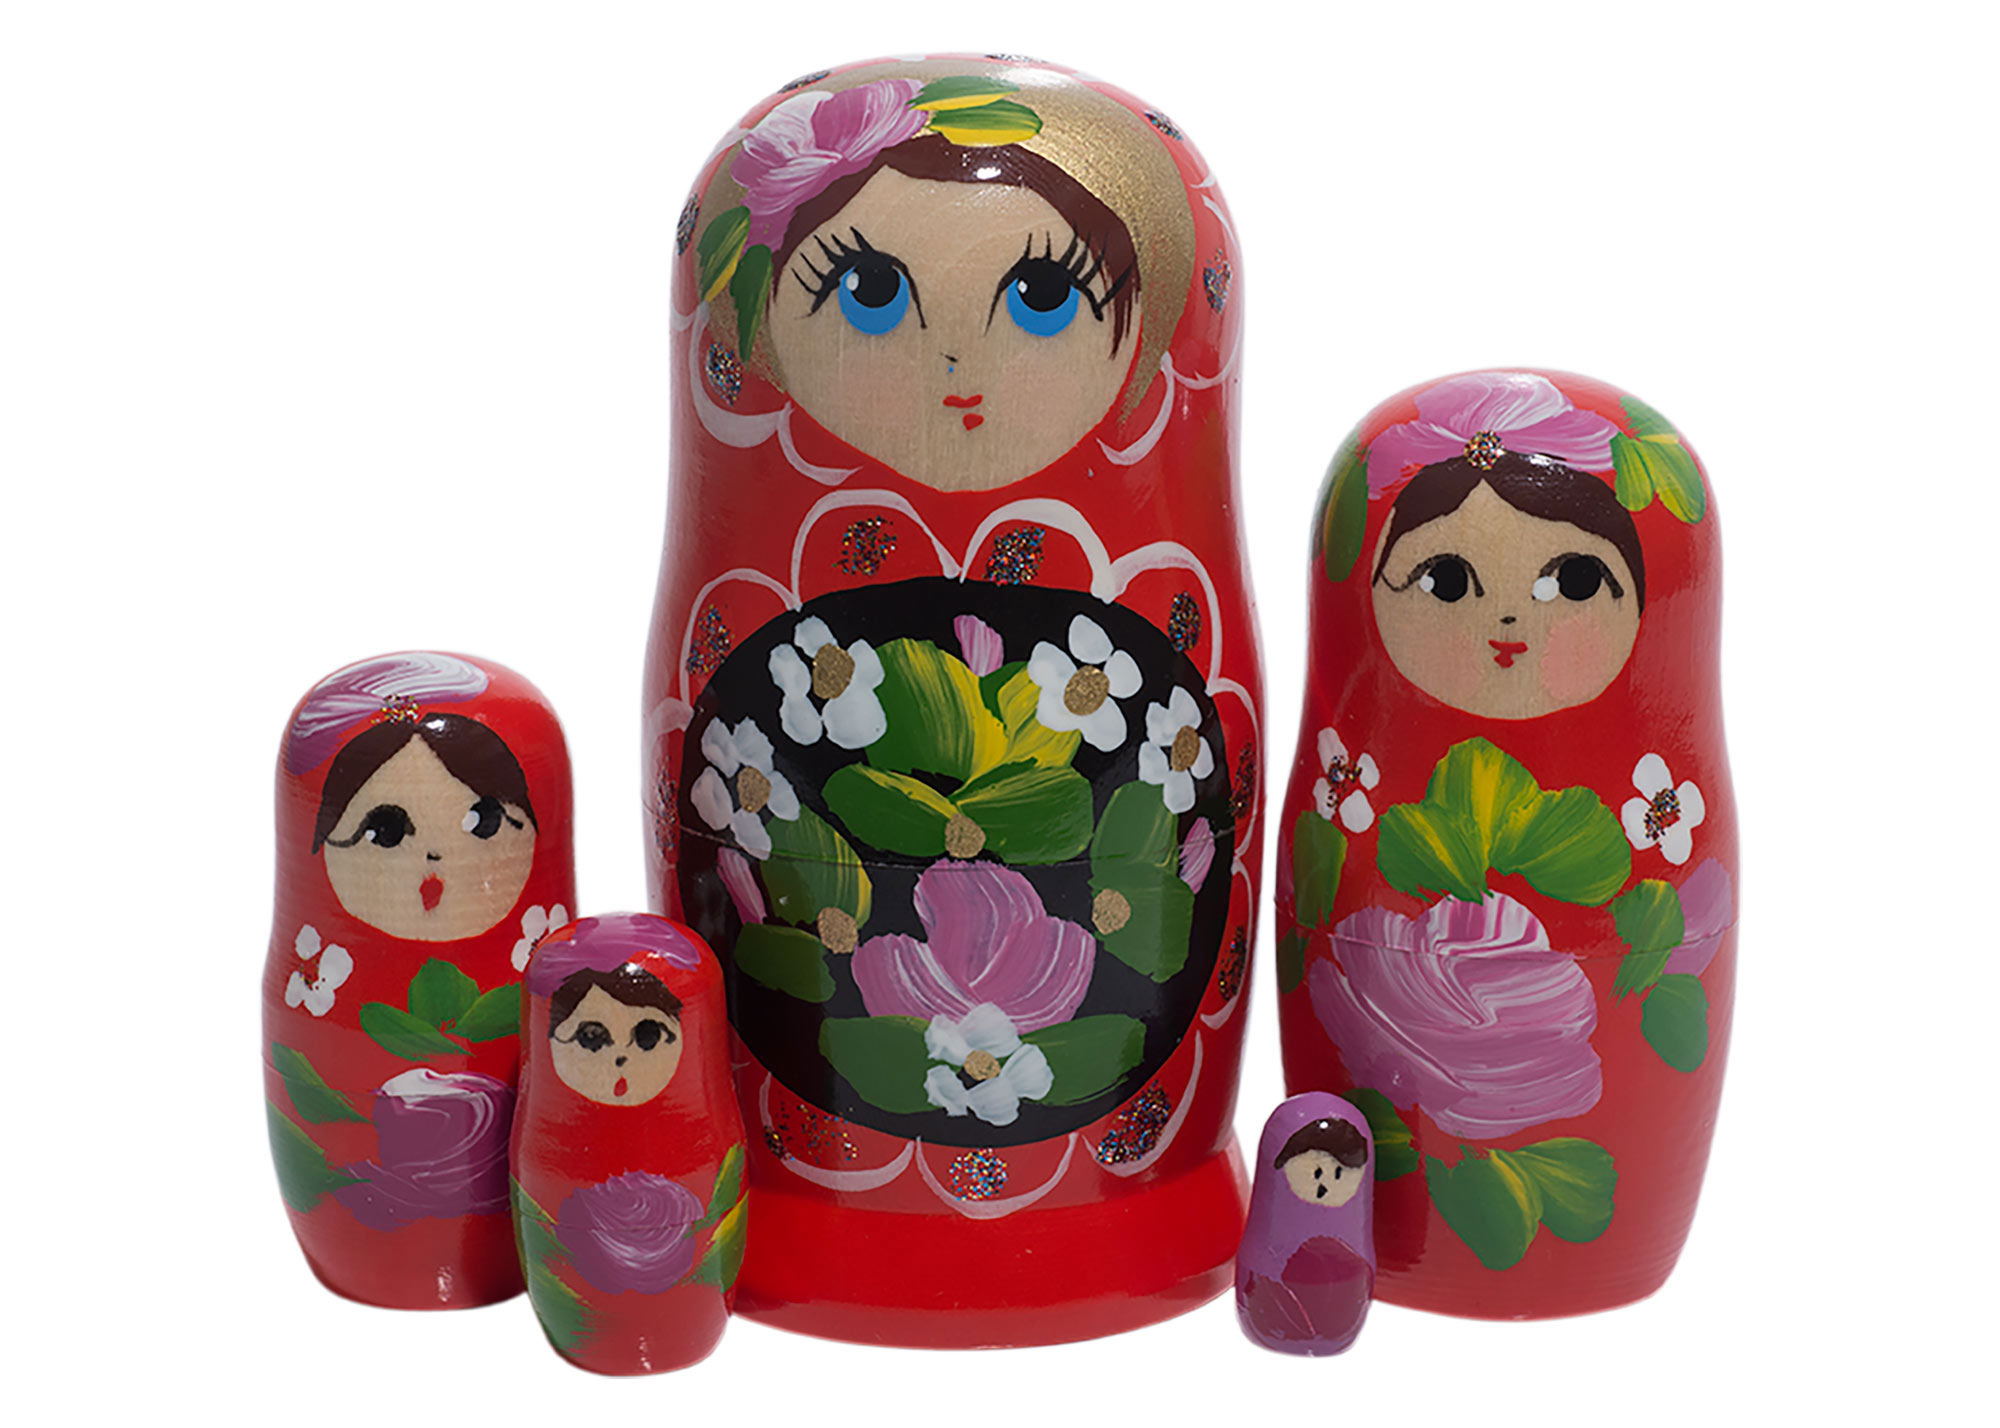 Buy Red Art Babooshka Doll 5pc./4" at GoldenCockerel.com